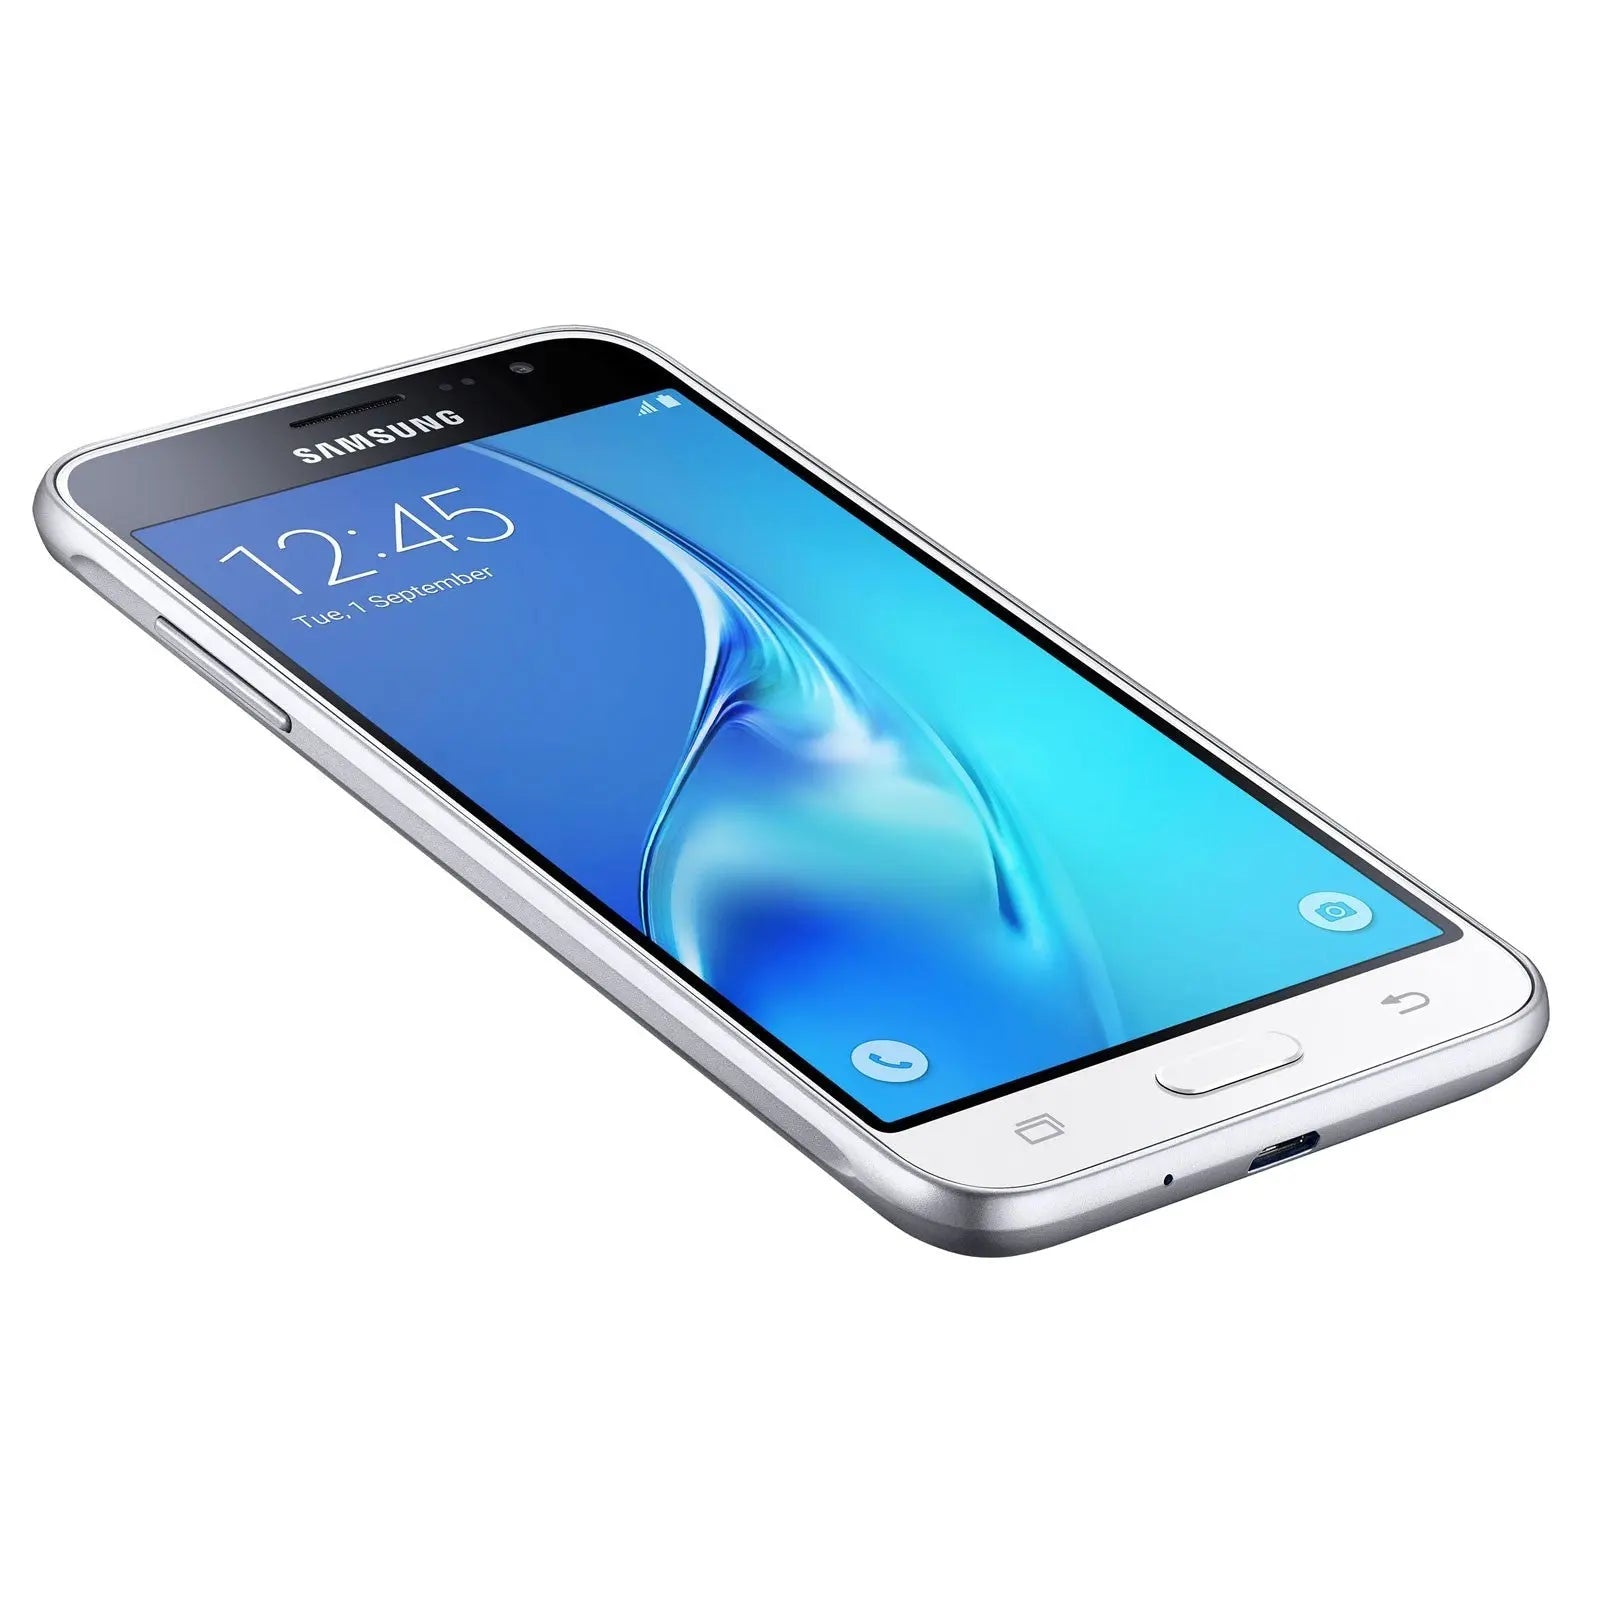 Smartphone Samsung Galaxy J3 2016 ( blanc ) Samsung